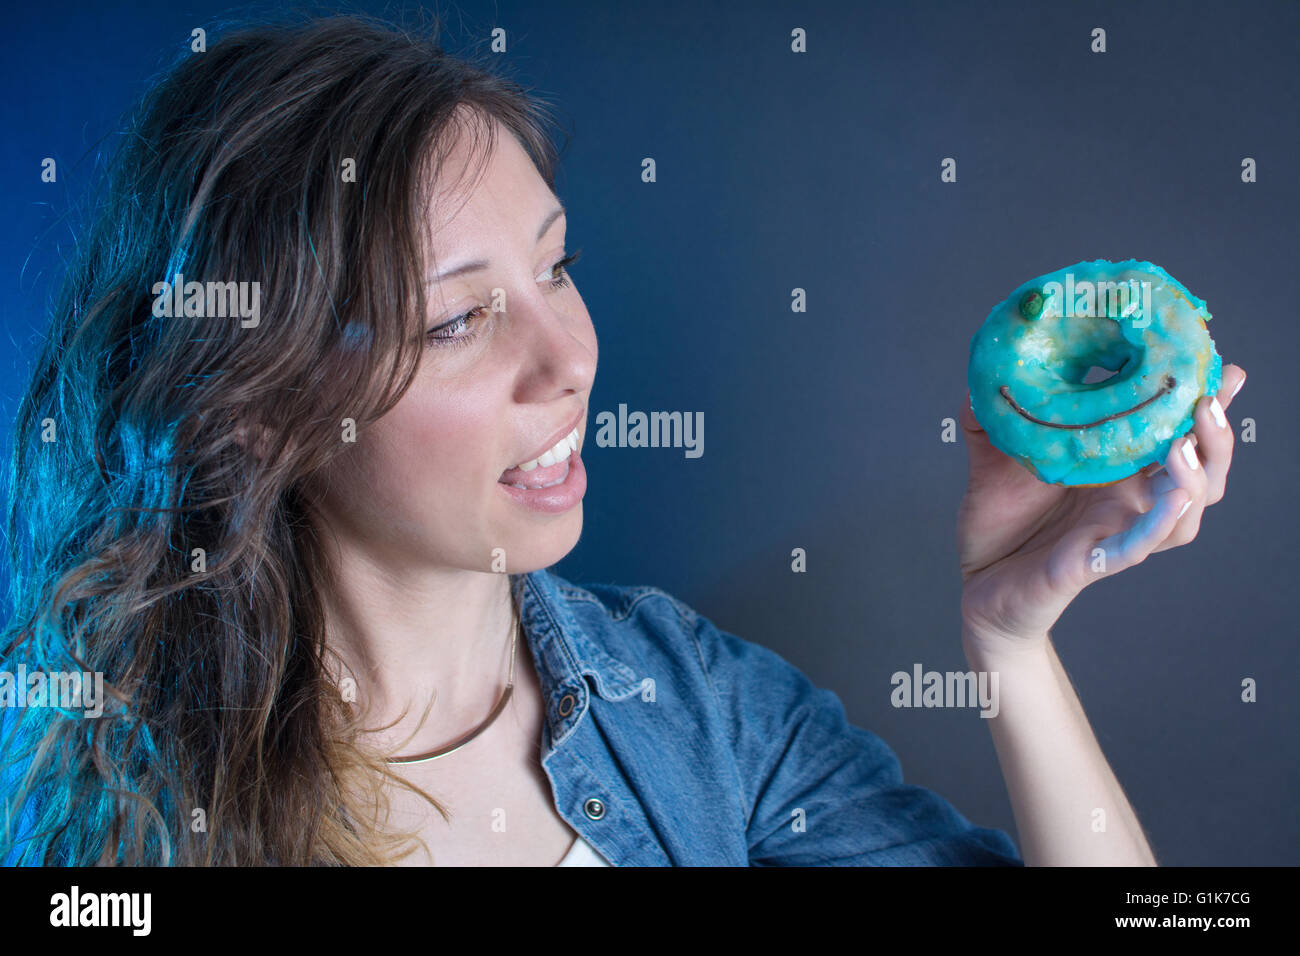 Girl holding un smiley bleu donut Banque D'Images